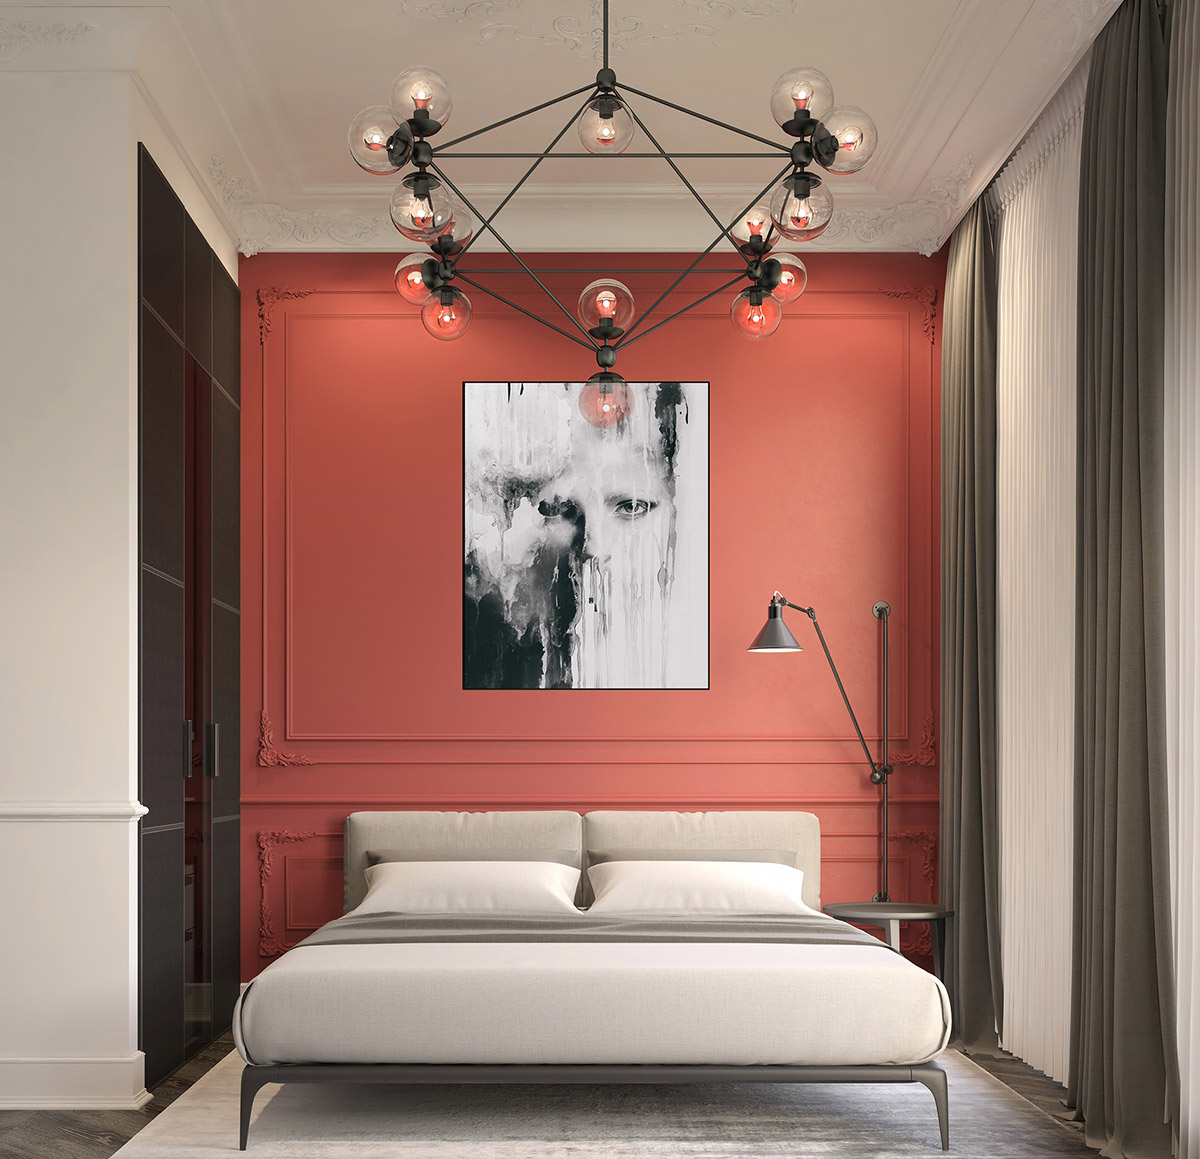 red-grey-and-black-bedroom-600x580.jpg